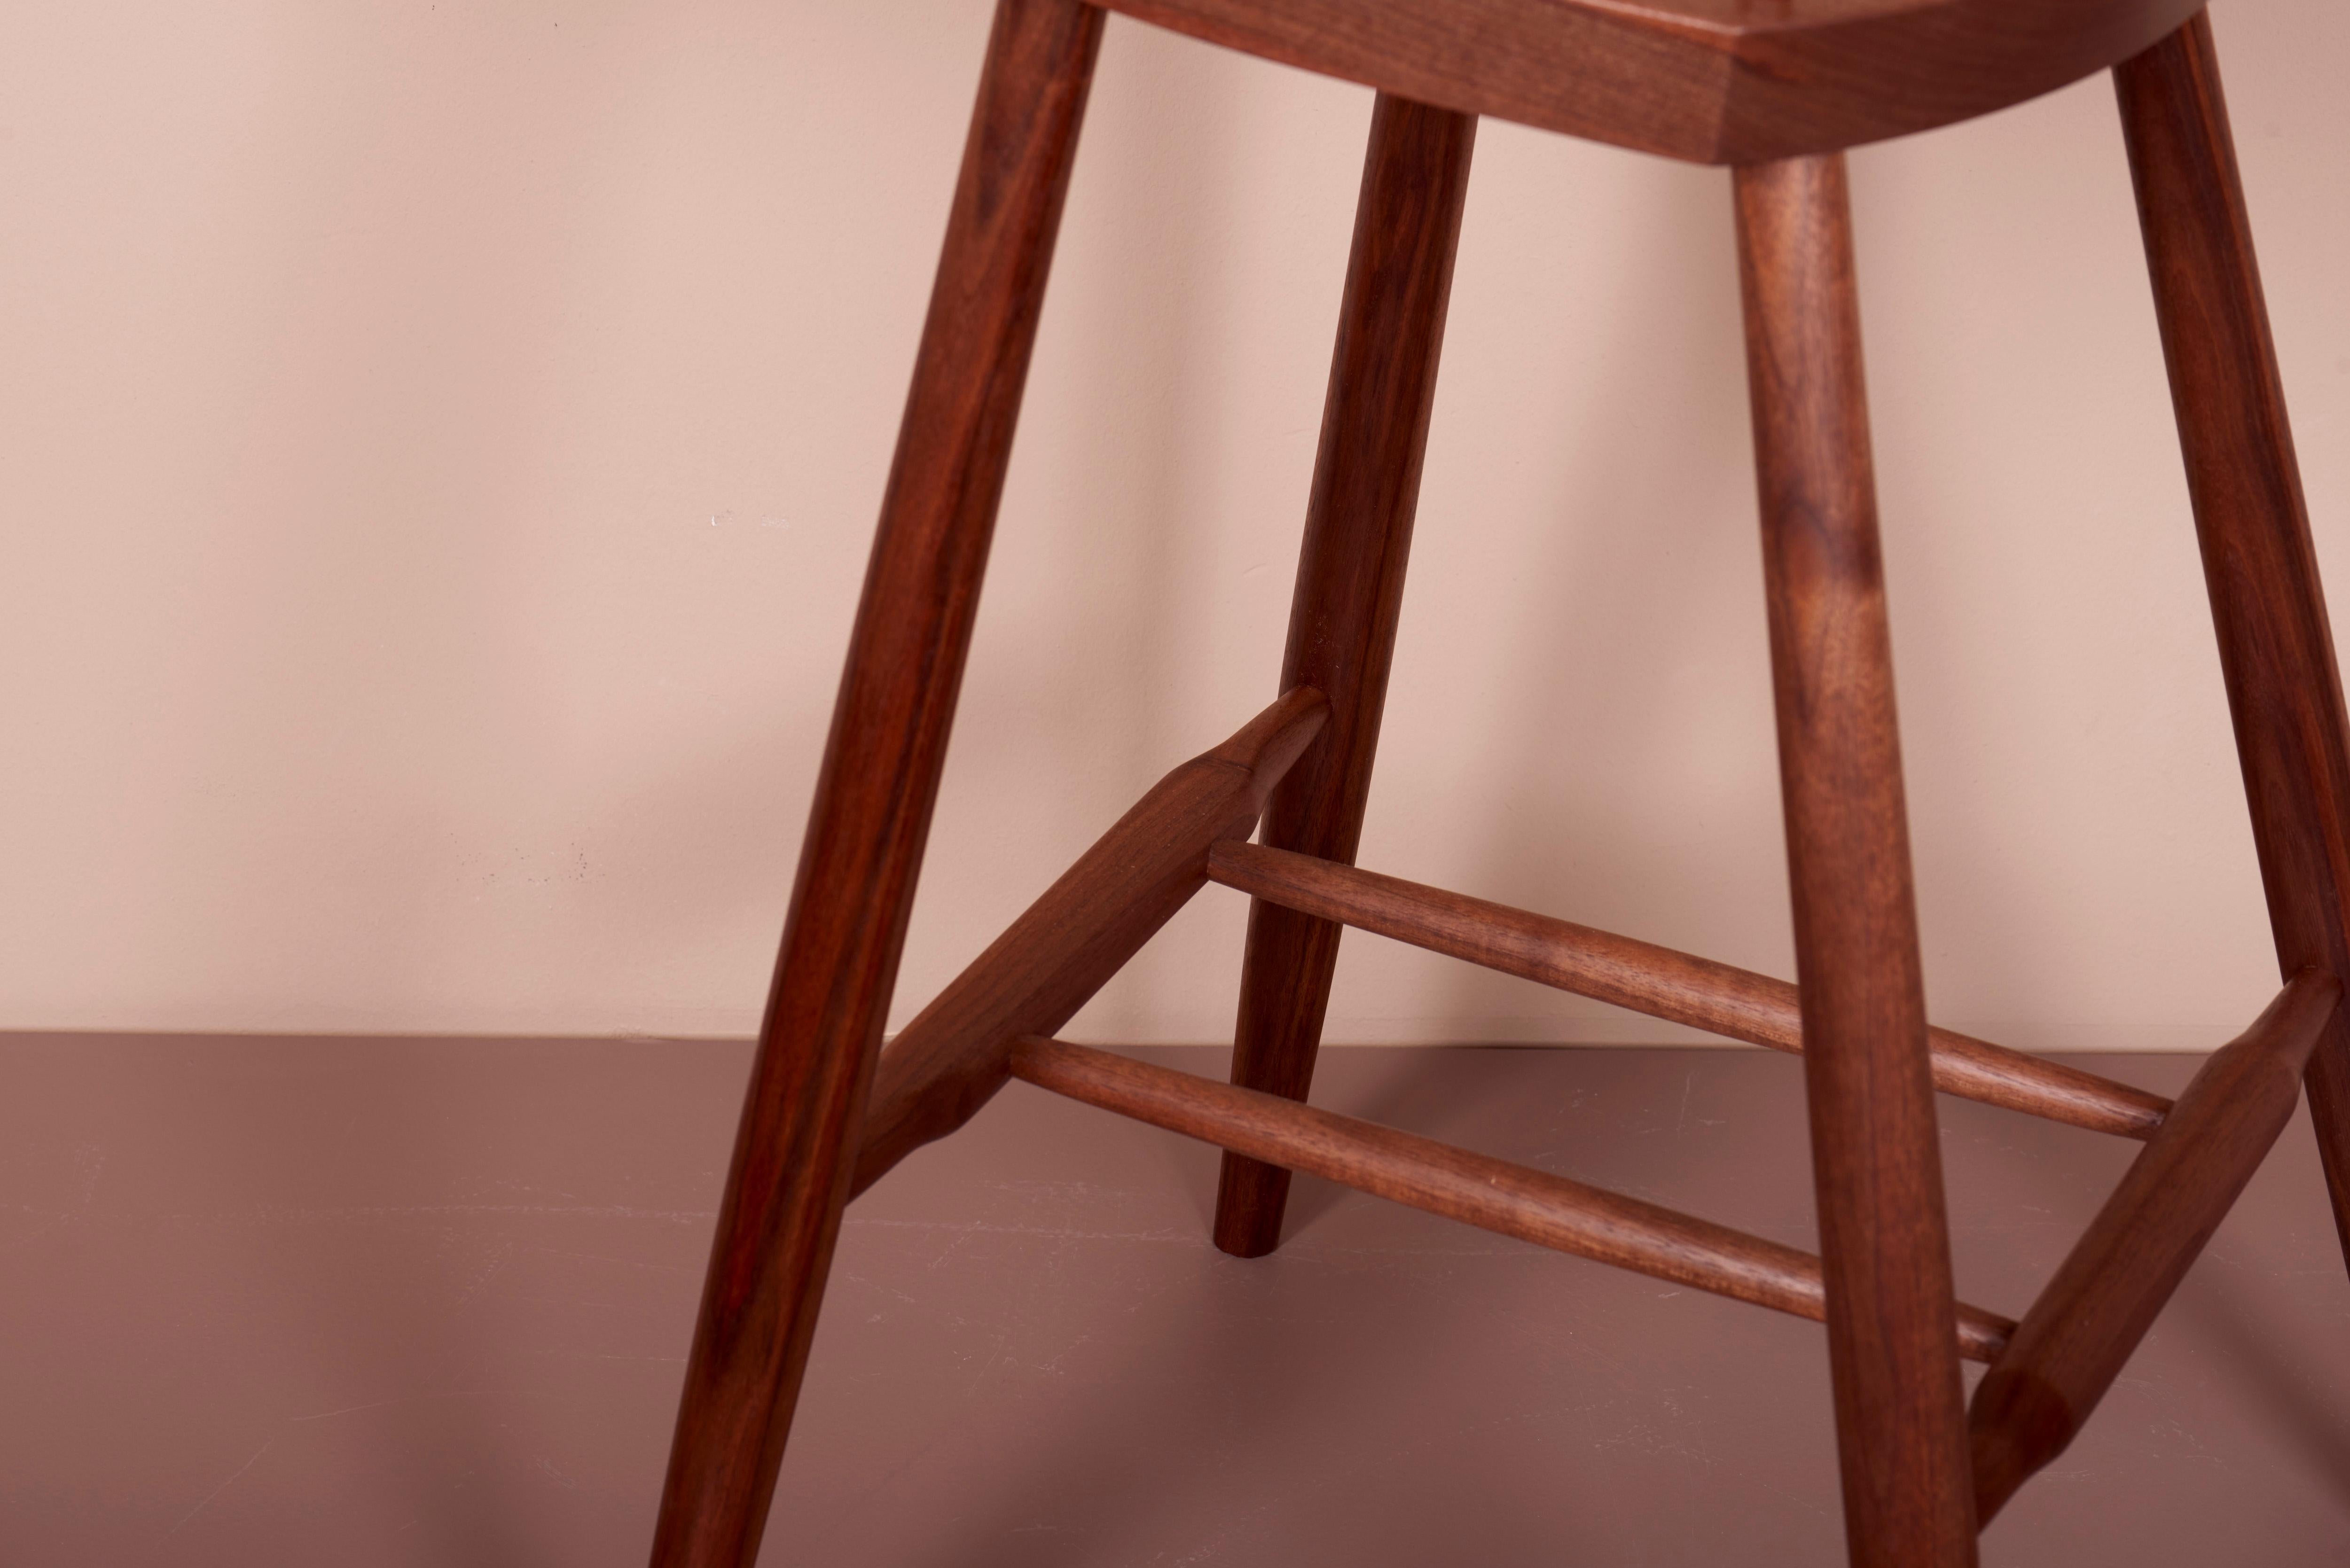 Four Mira Nakashima 4-Legged High Chairs based on a design by George Nakashima For Sale 1